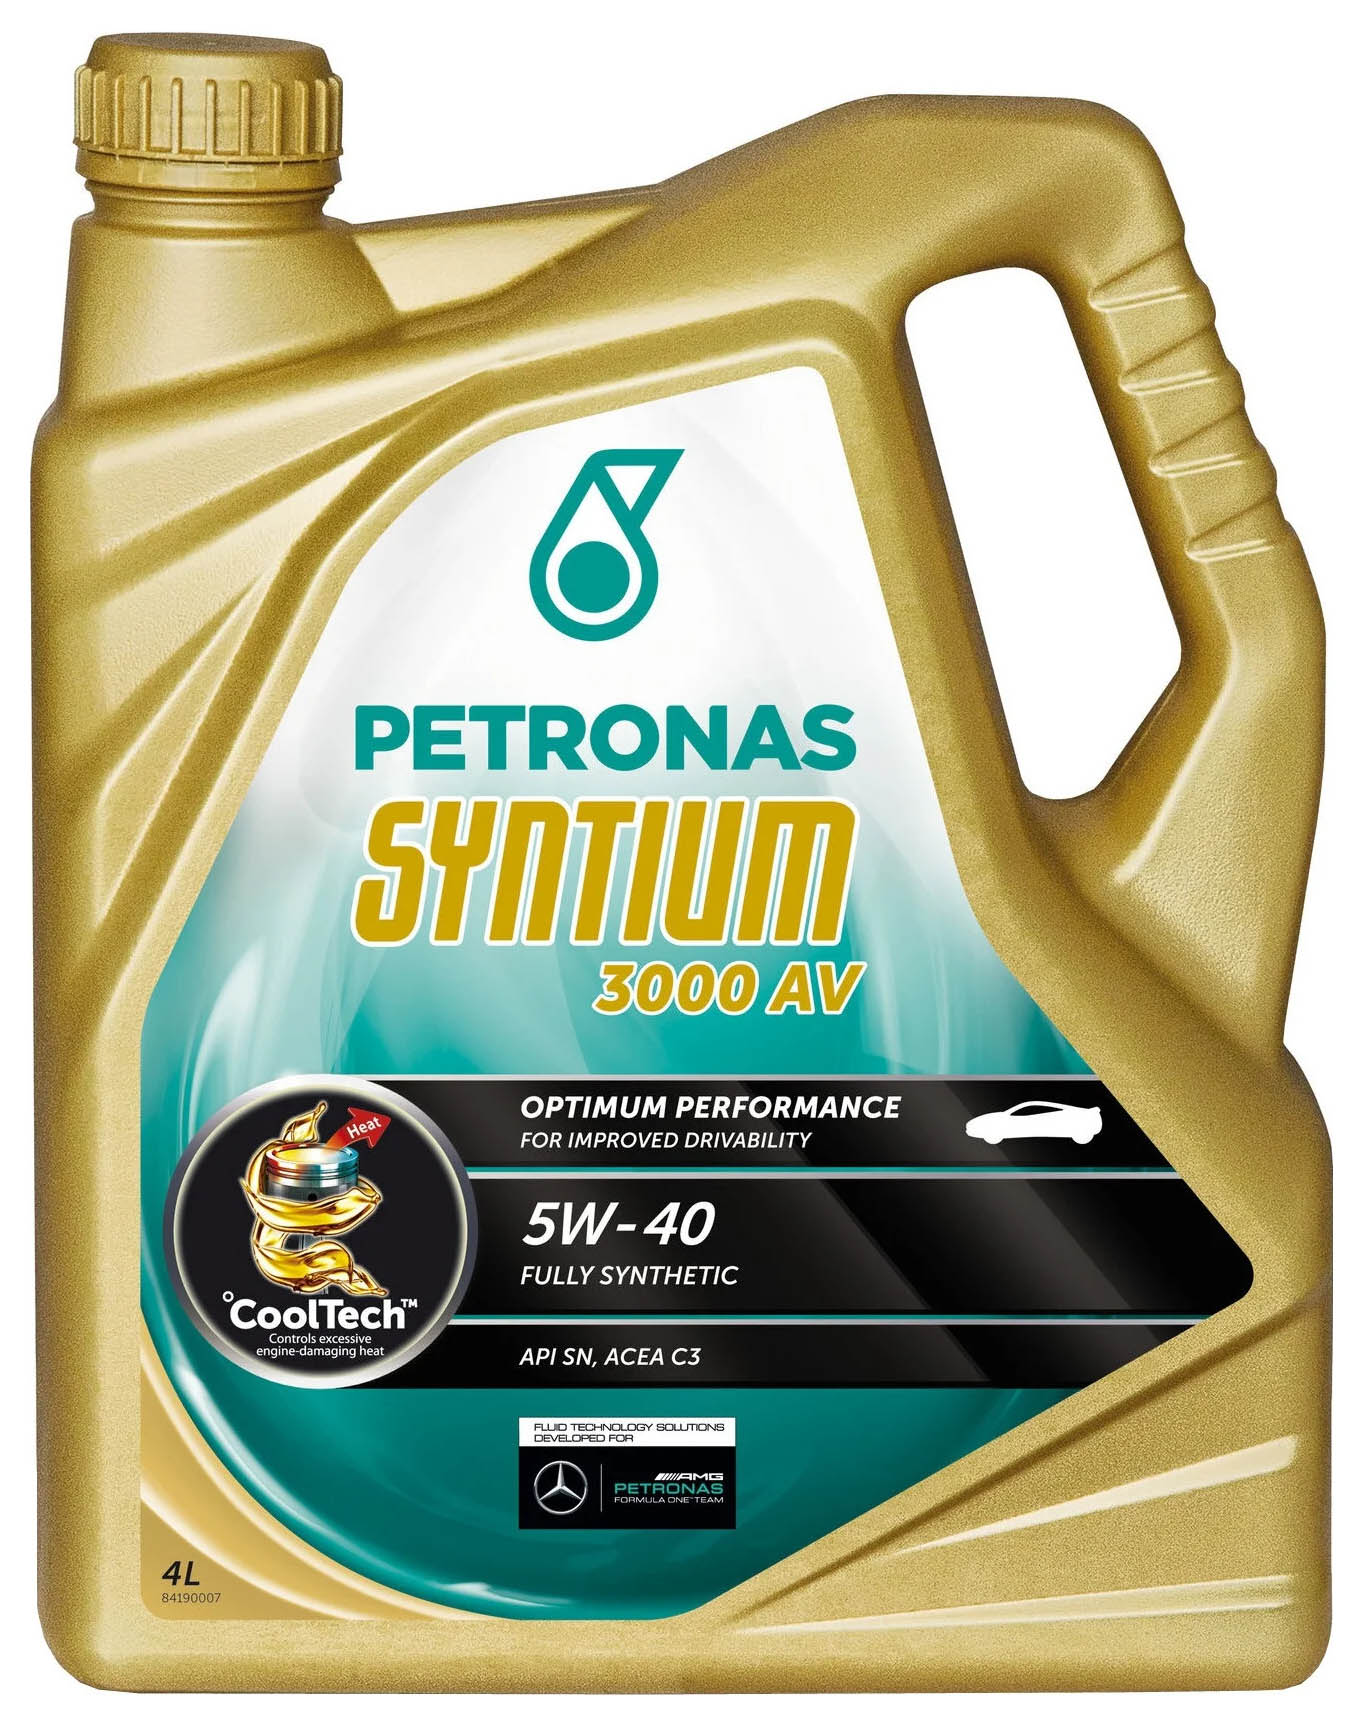 PETRONAS Моторное масло PETRONAS Syntium 3000 AV 5W-40 синтетическое 4 л 18284019